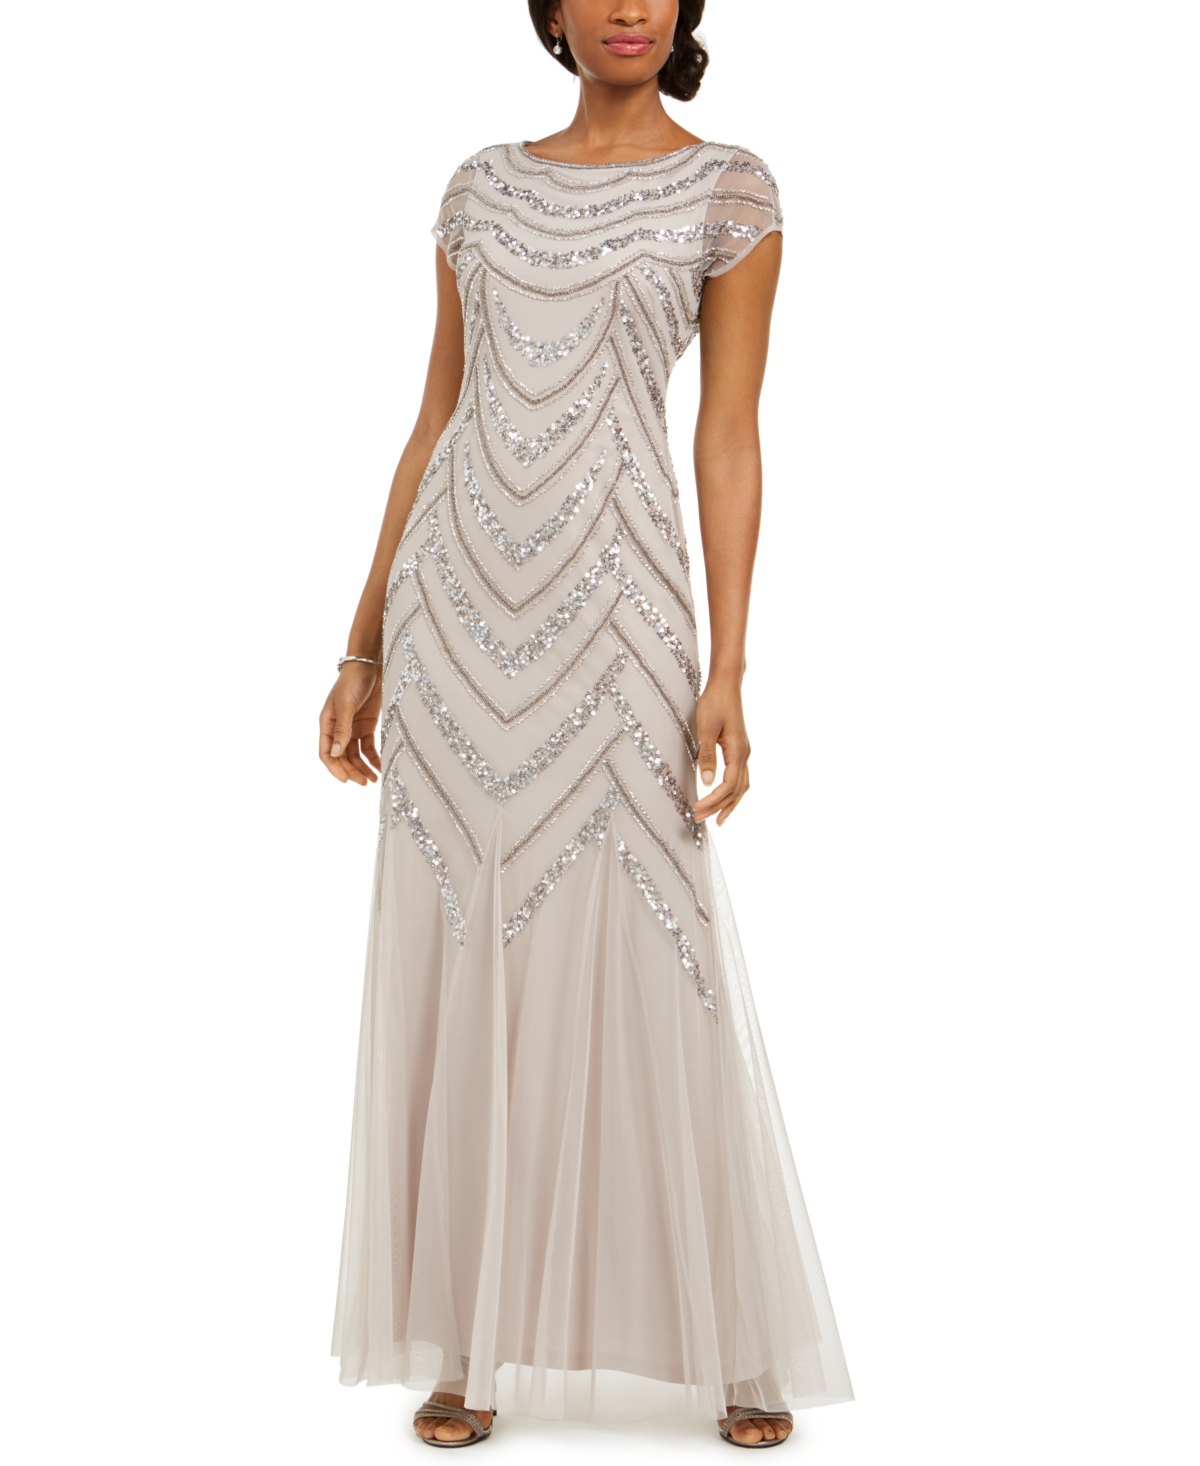 1930s Style Wedding Dresses | Art Deco Wedding Dress Adrianna Papell Embellished Godet-Inset Gown - Marble Taupe $249.00 AT vintagedancer.com